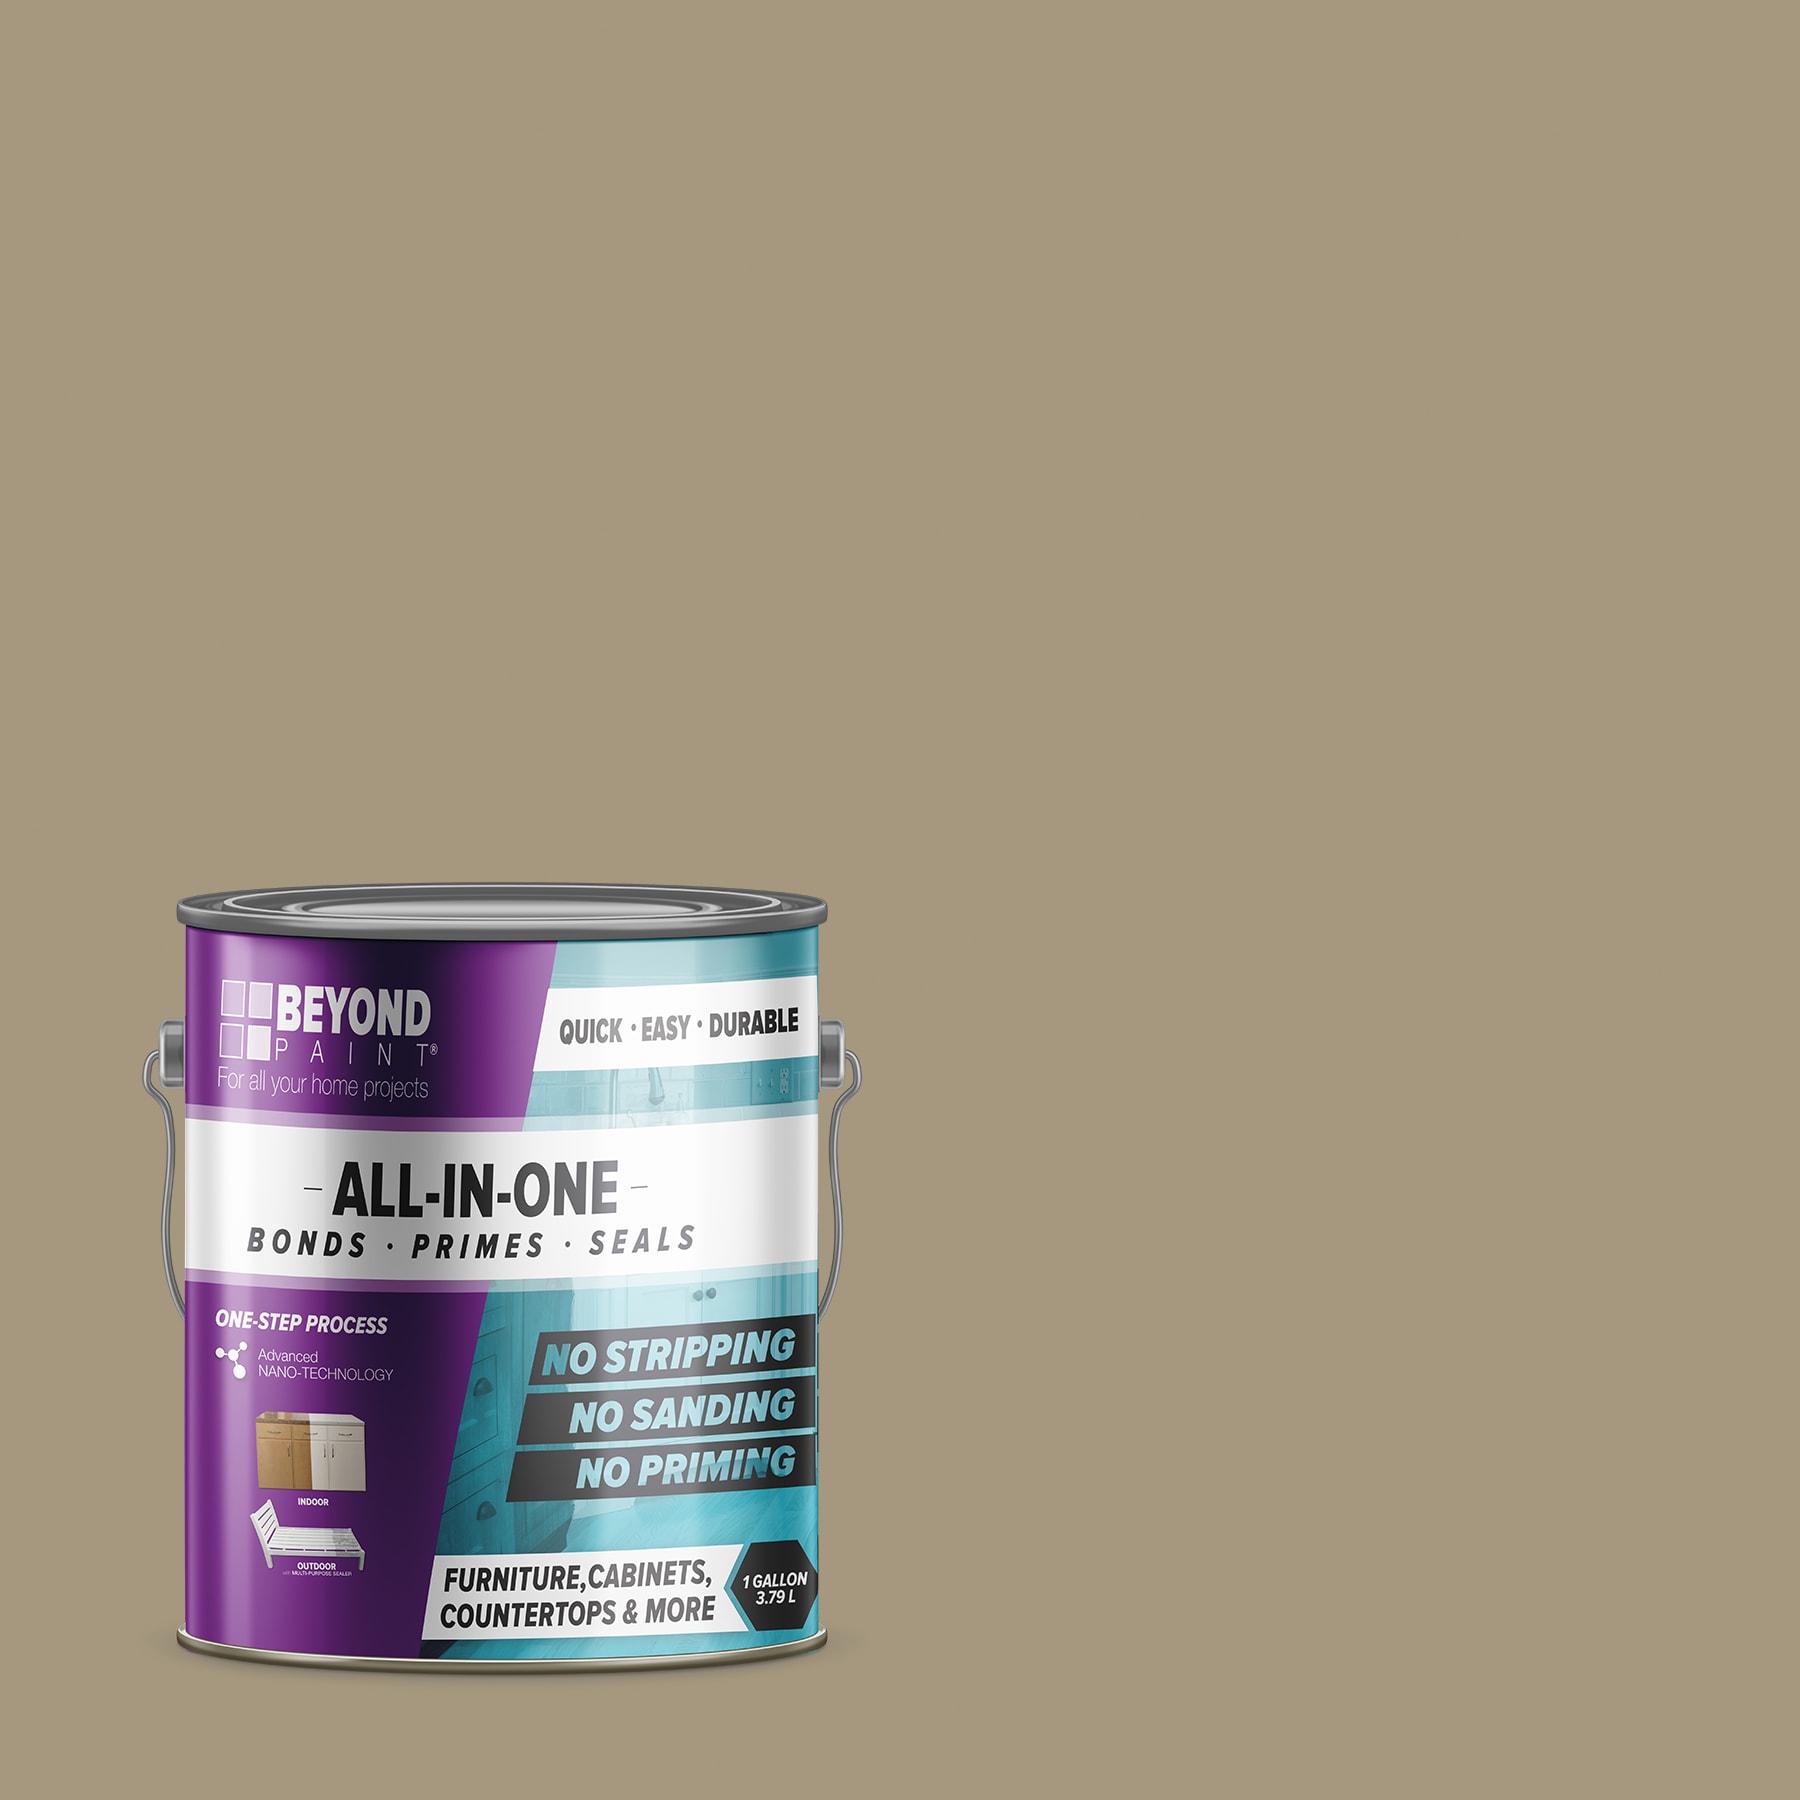 Rust-Oleum Sure Color Smooth Pebbles, Interior Paint + Primer, Flat Finish,  2-Pack 